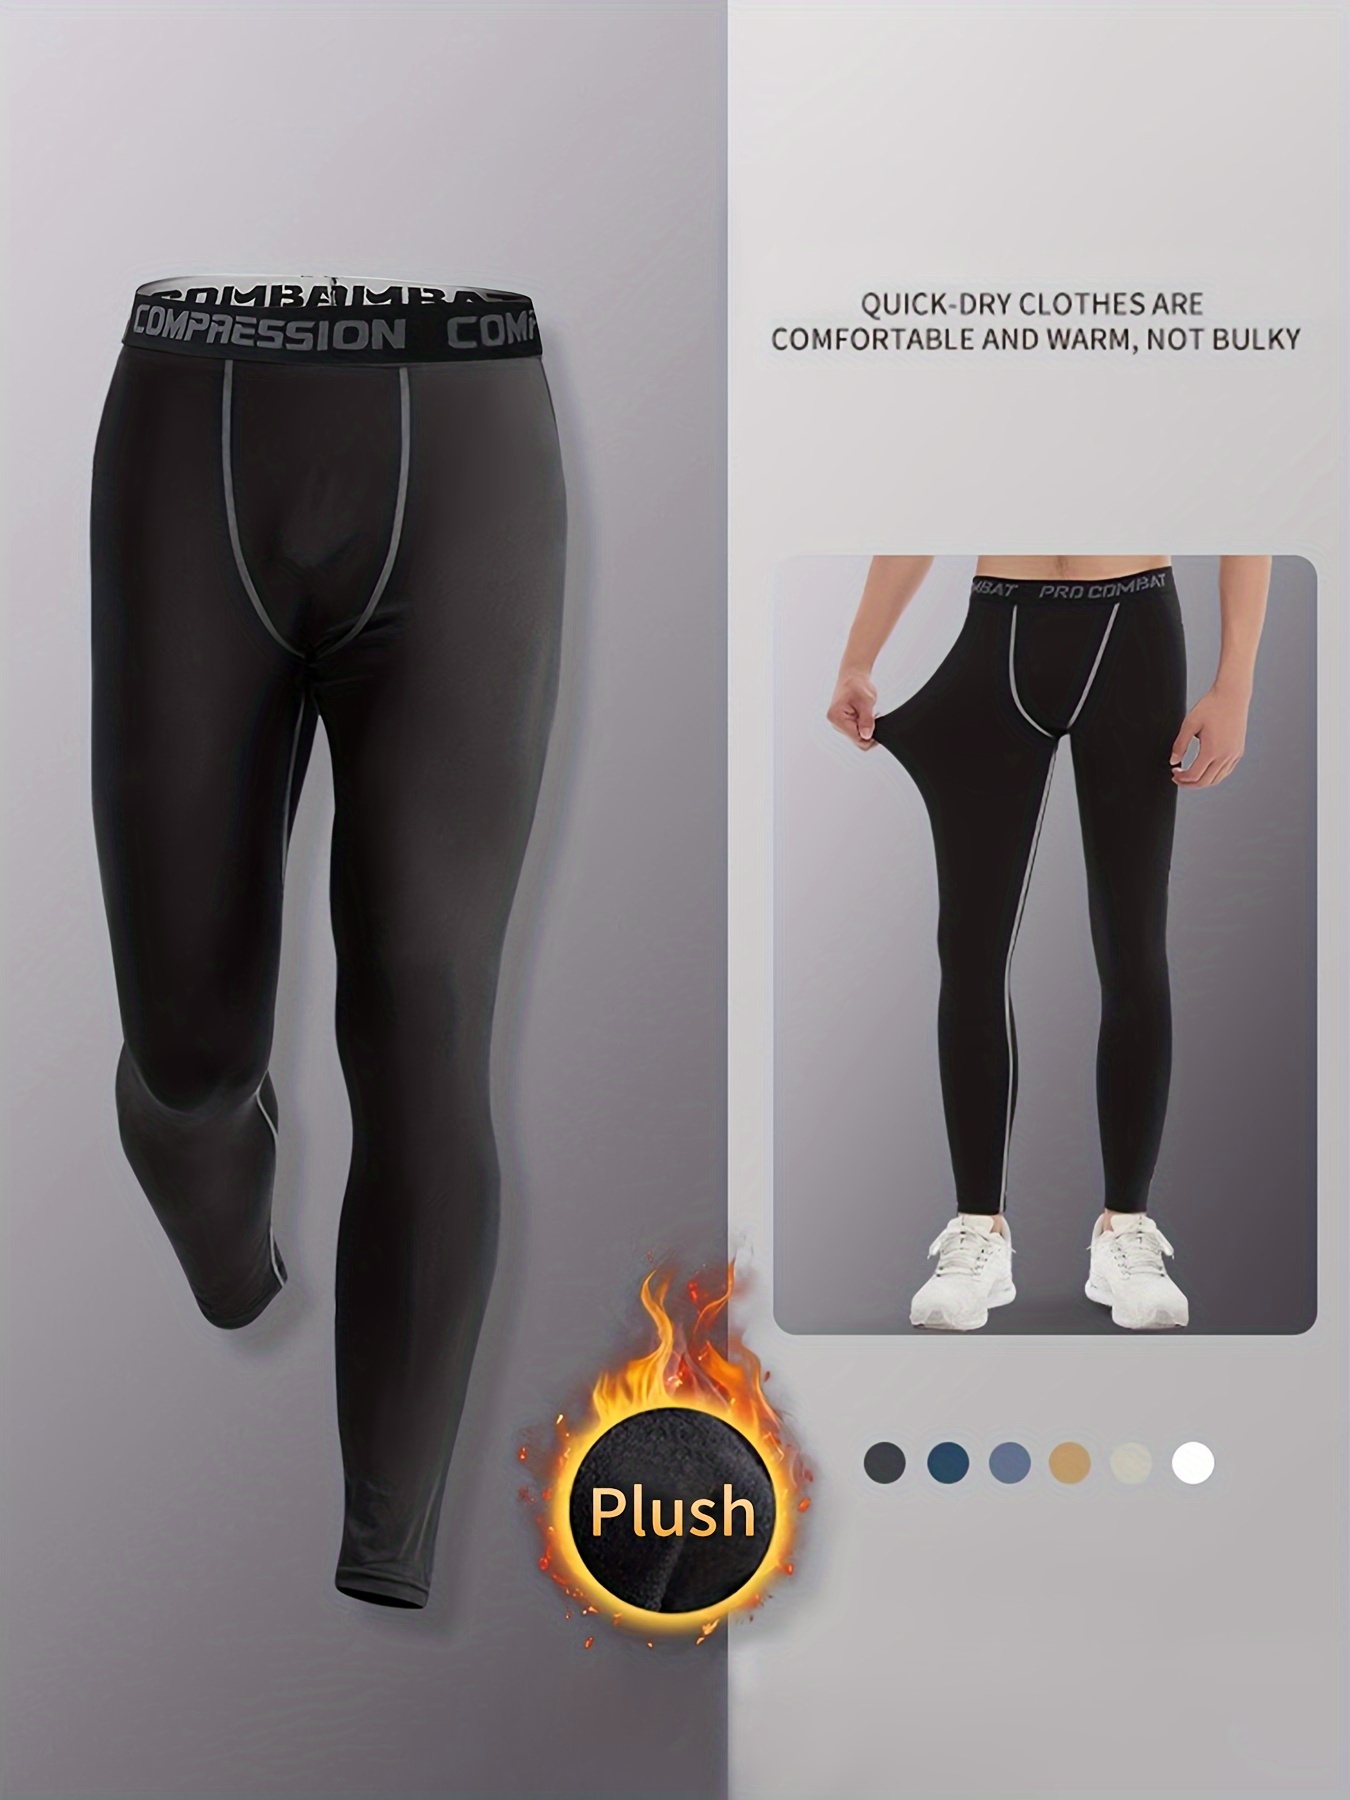 Quick drying Men's Compression Leggings Yoga Running Fitness